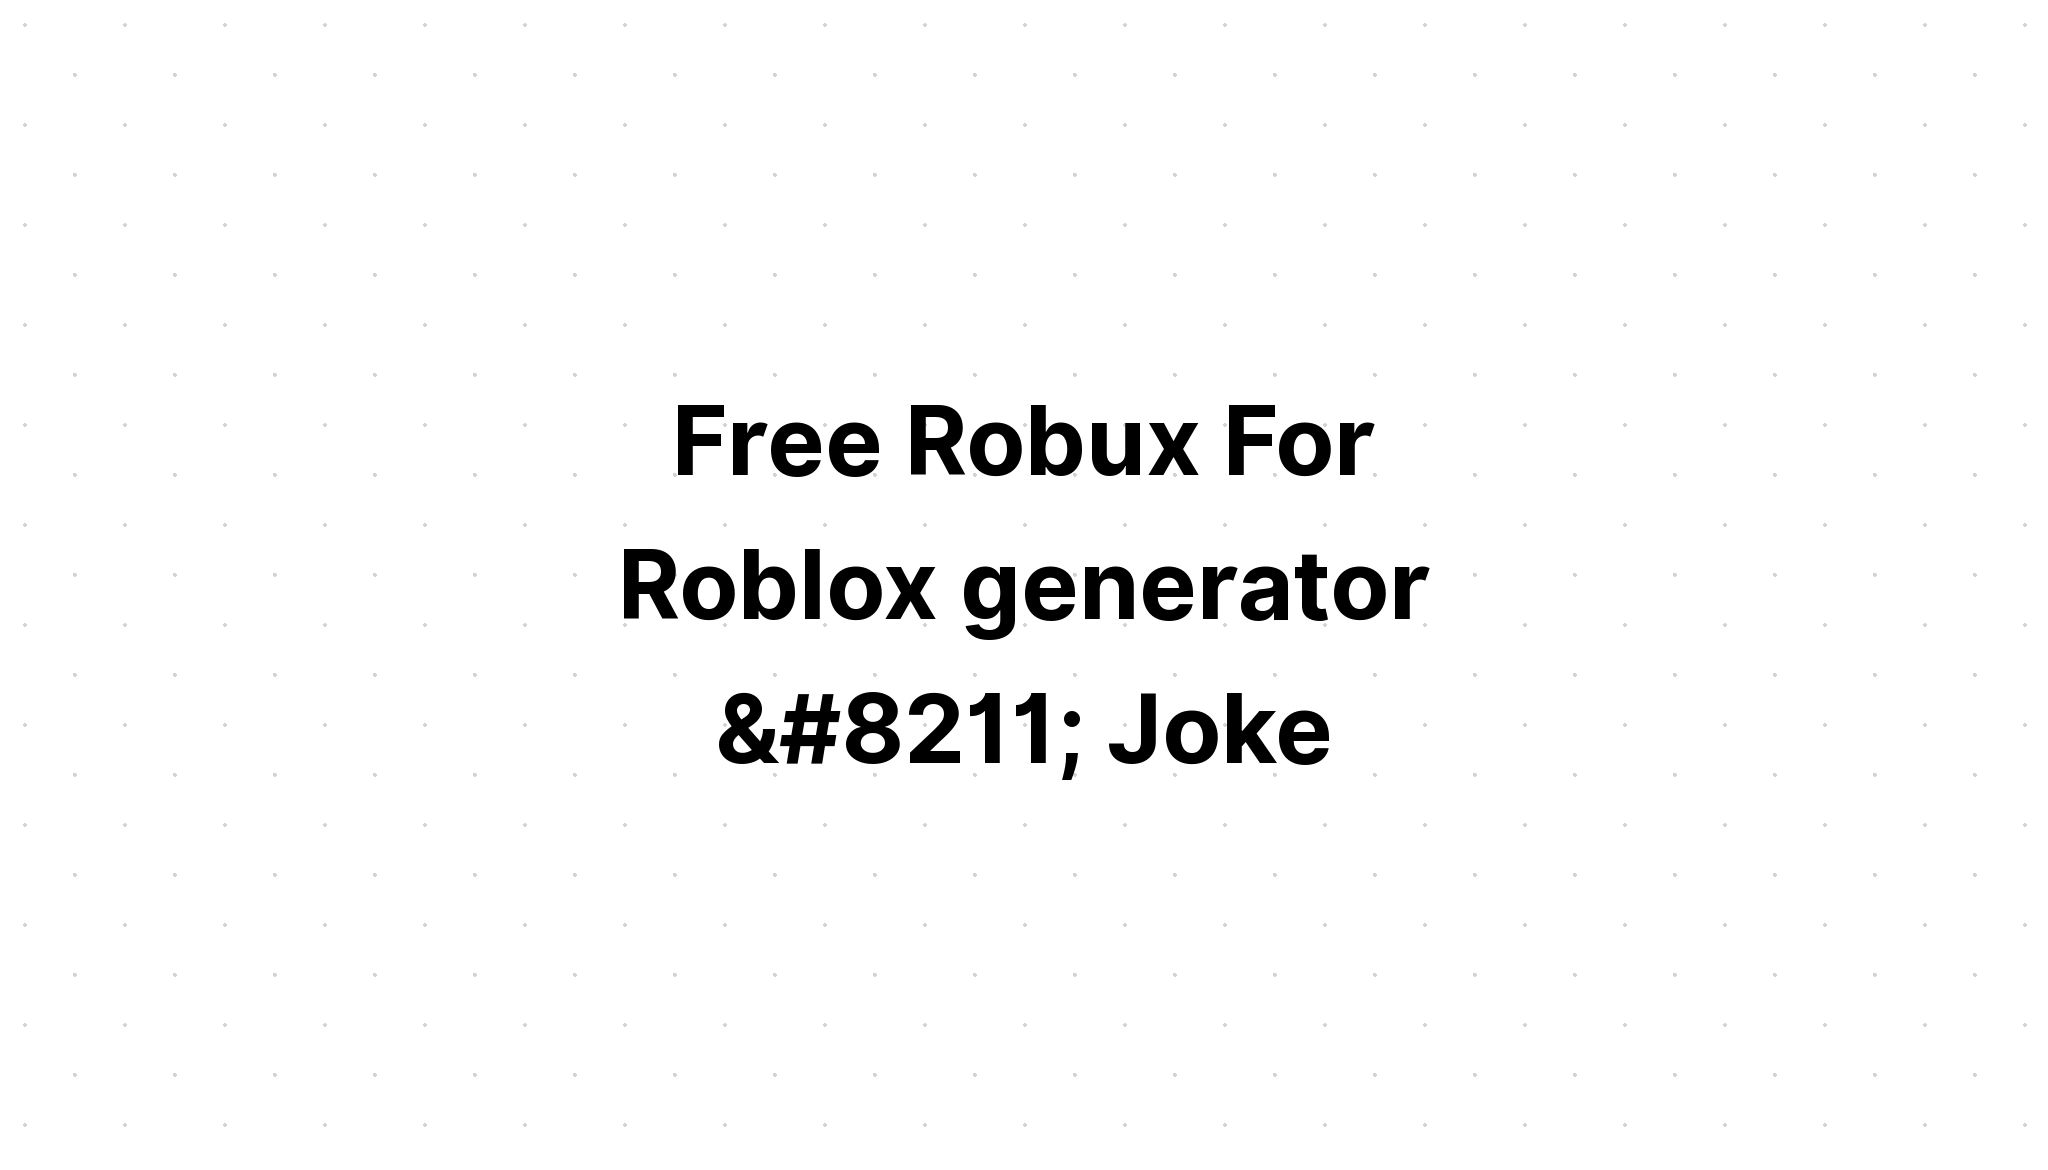 تنزيل Free Robux For Roblox Generator Joke متجر بلاي العرب - free robux for roblox generator joke